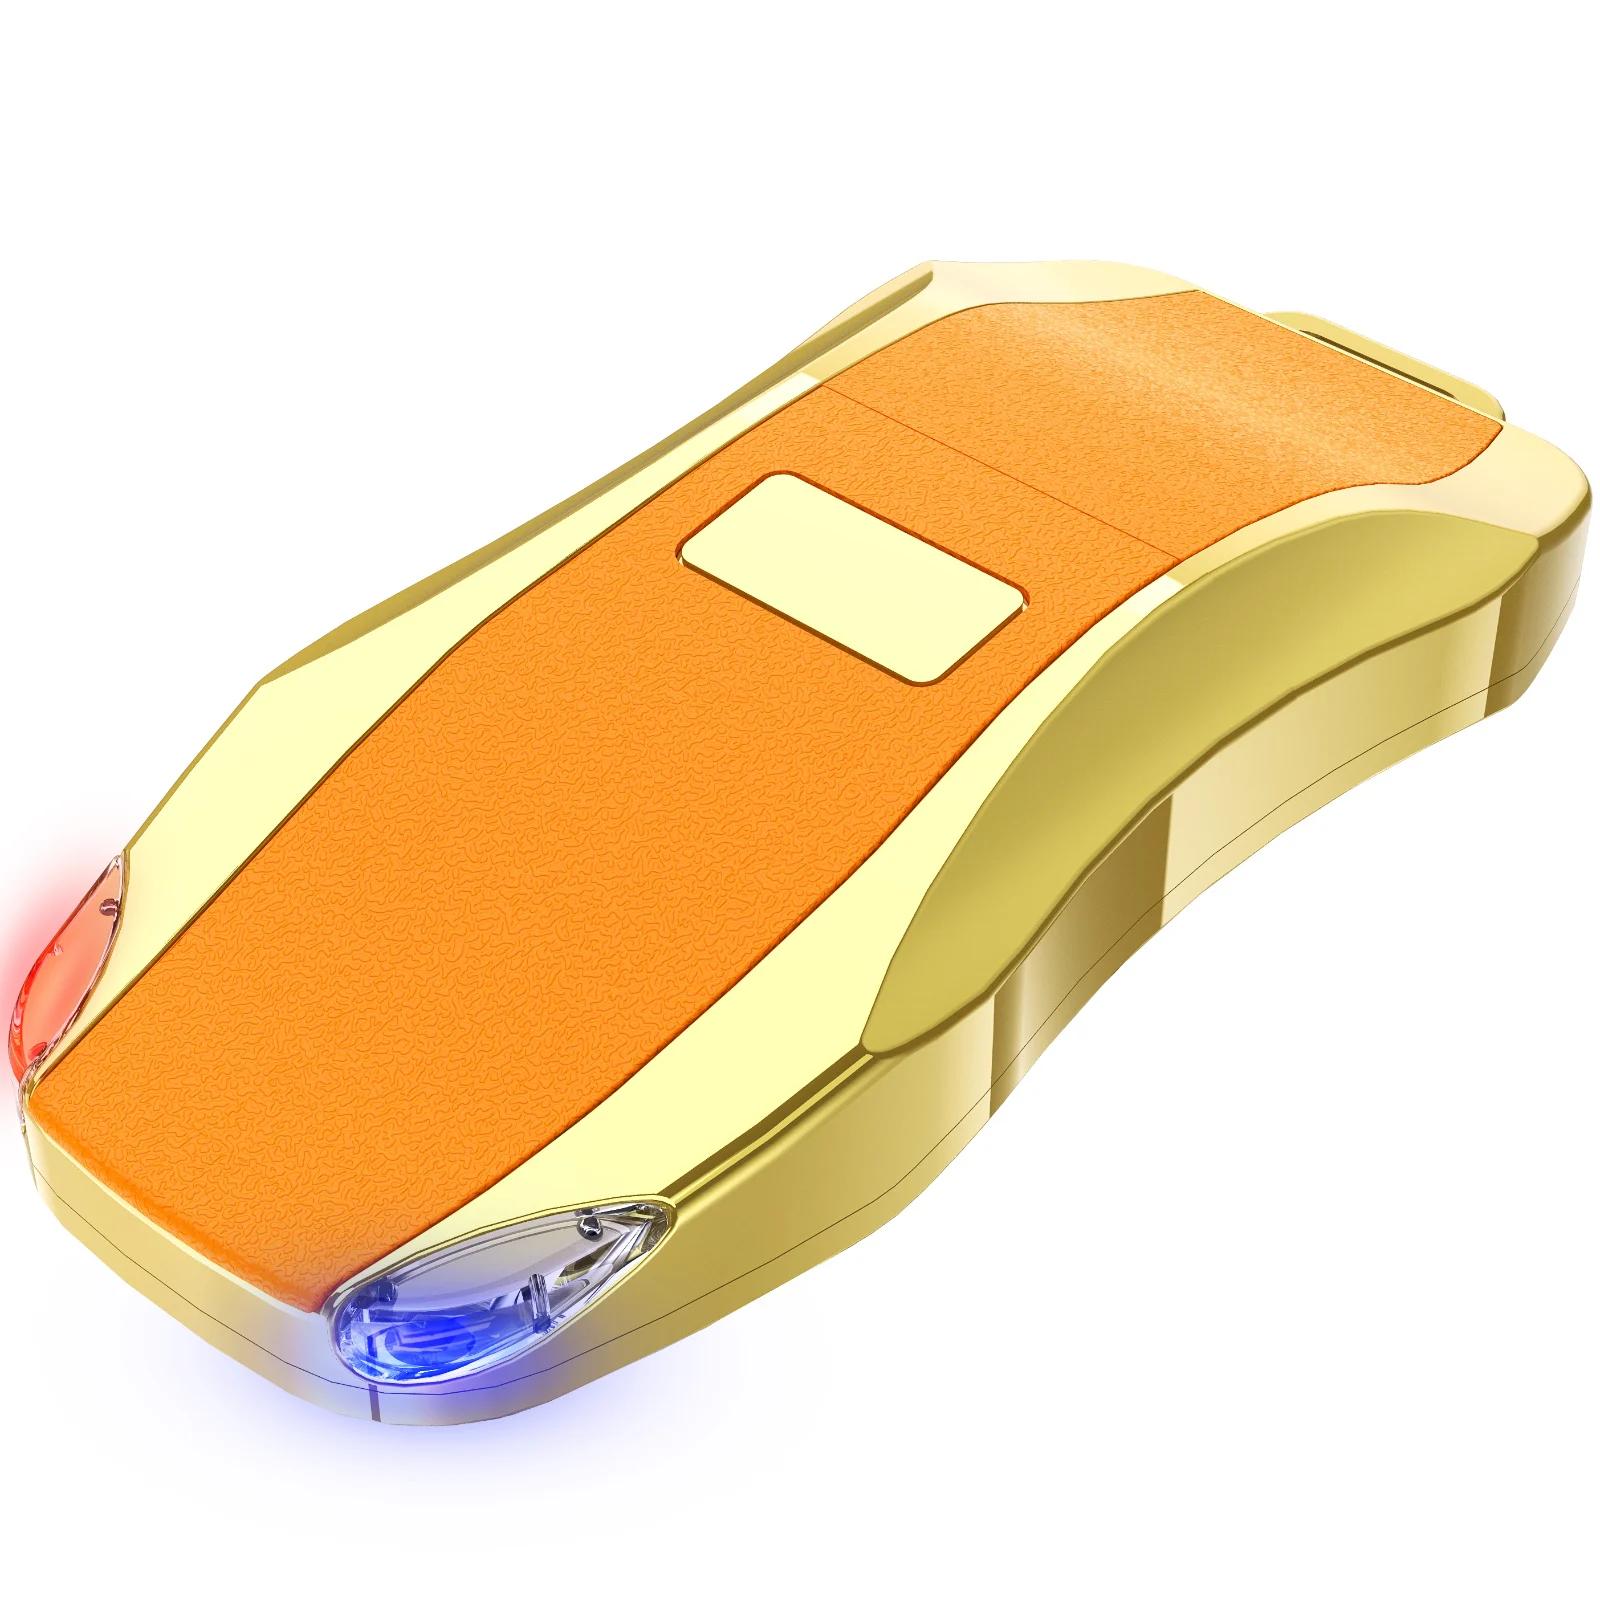 NEXPEAK NSCAN OBD2 Scanner Automotriz Bluetooth OBD elm327 Android iOS Automotive Scanner Battery Tester OBD Car Diagnostic Tool